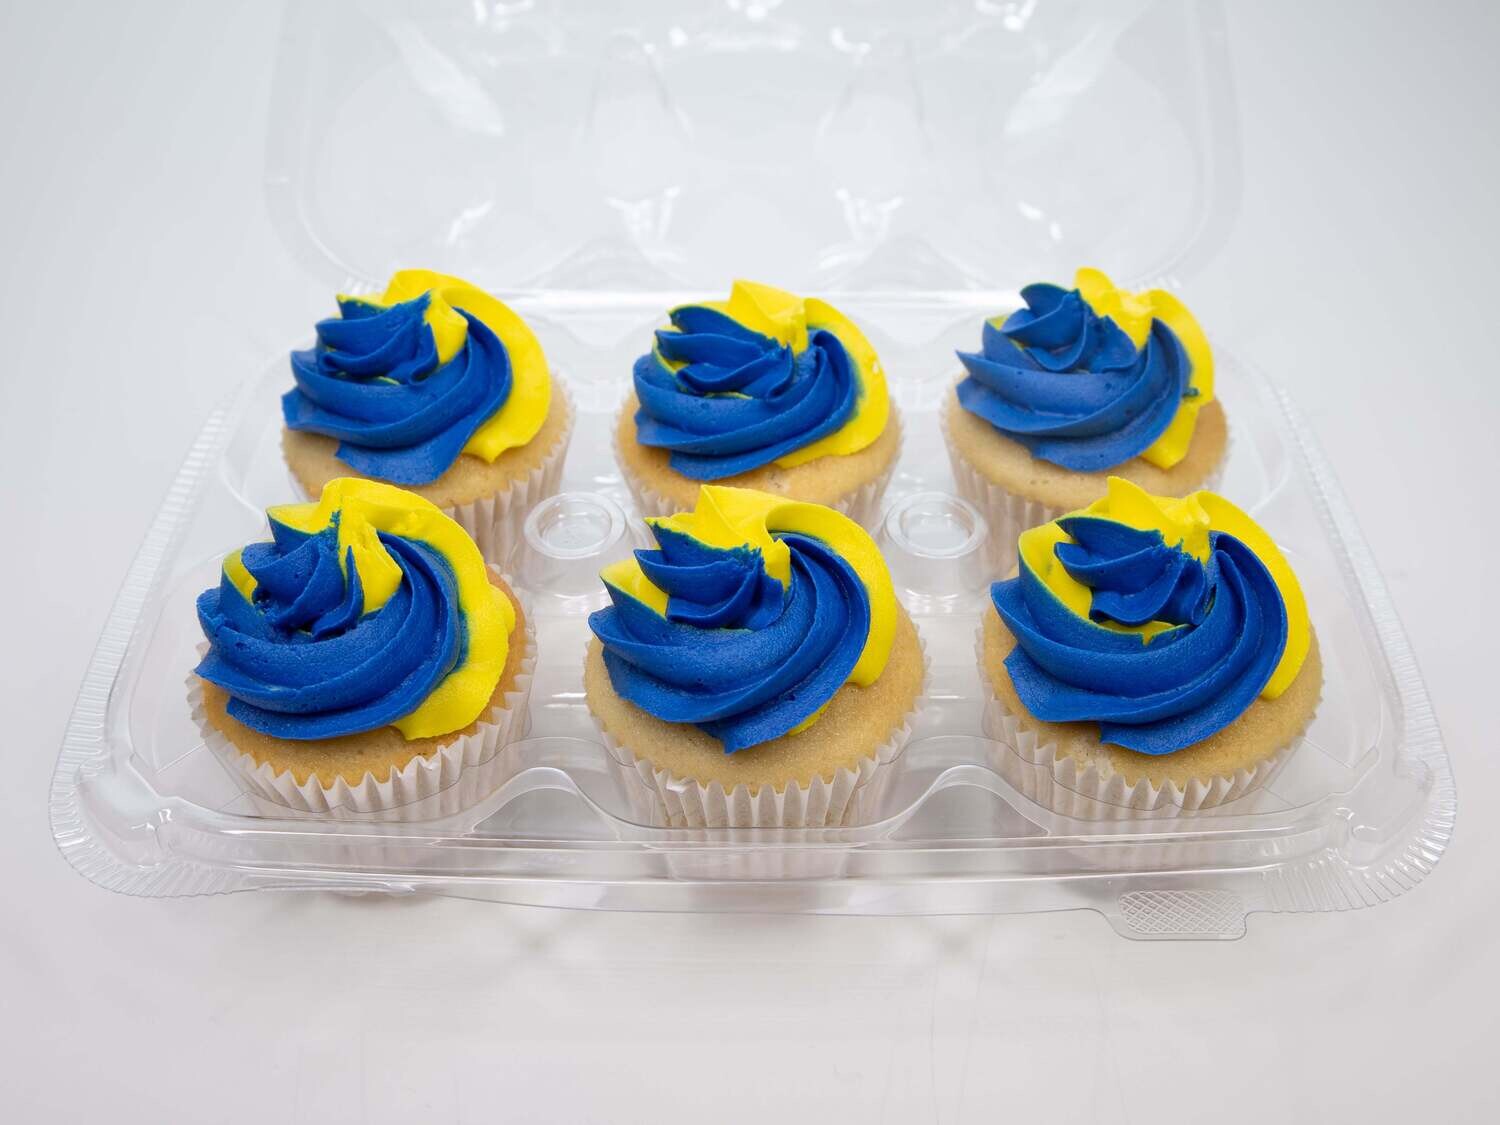 Ukraine Cupcakes